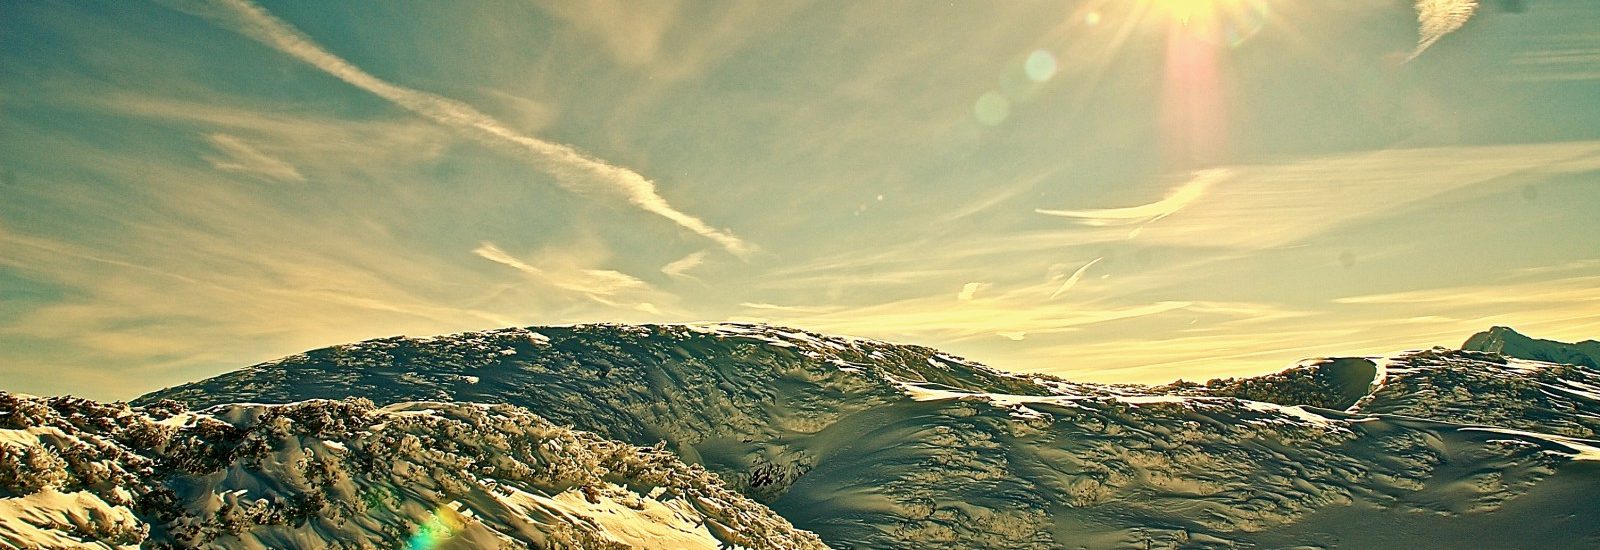 Wunderschönes Panorama vom Untersberg